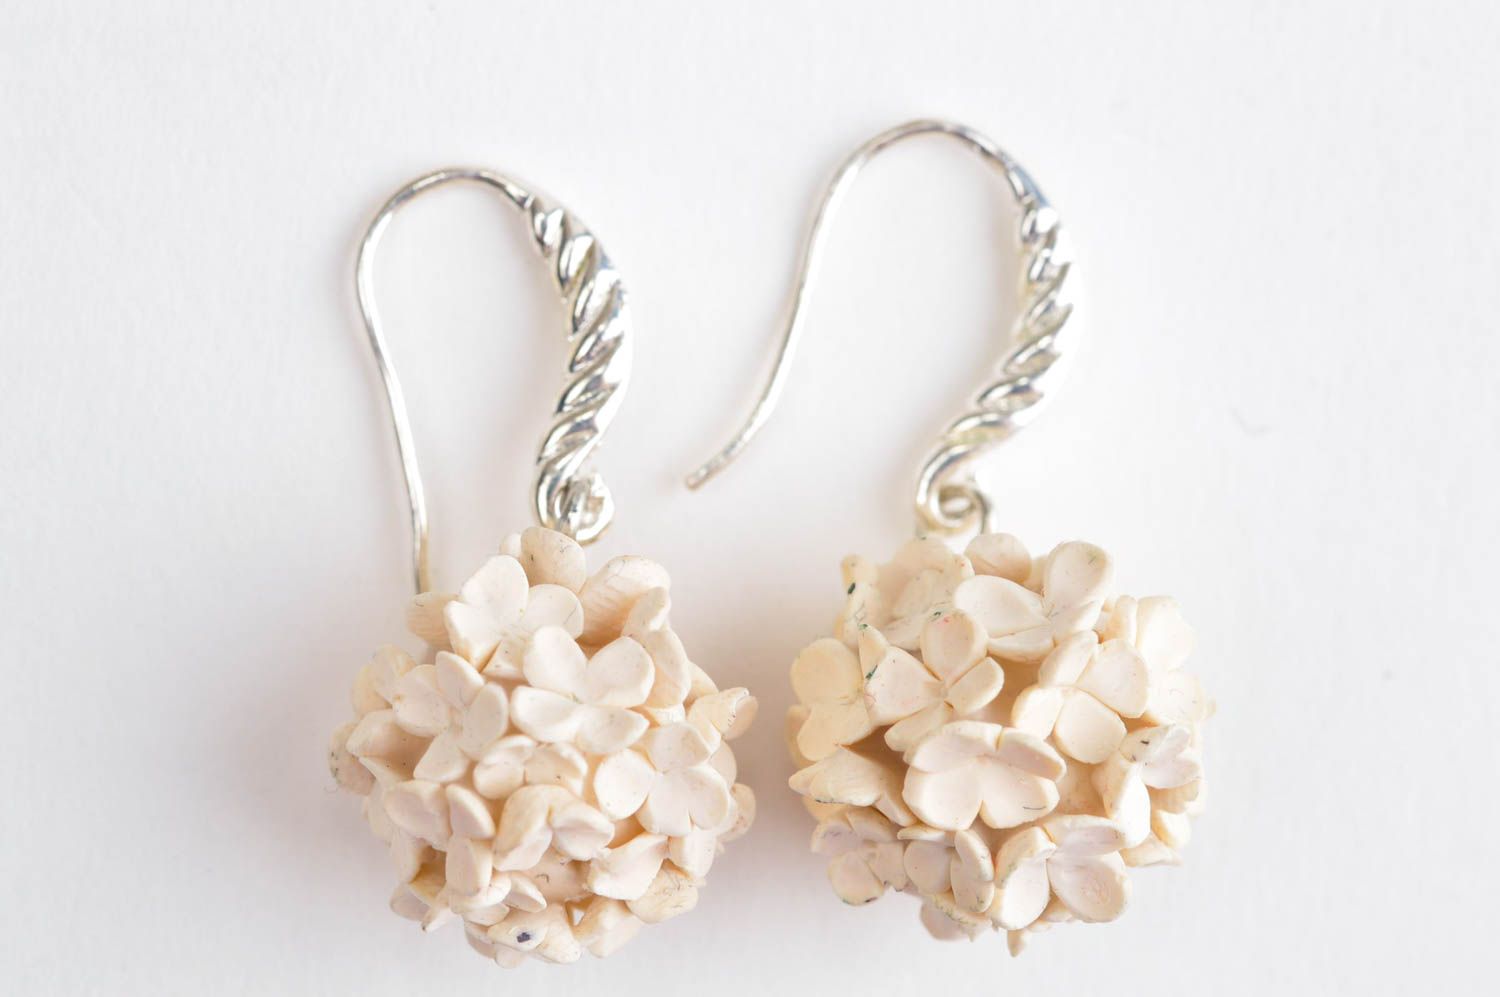 Beautiful handmade jewelry stylish cute accessory designer unusual earrings photo 2